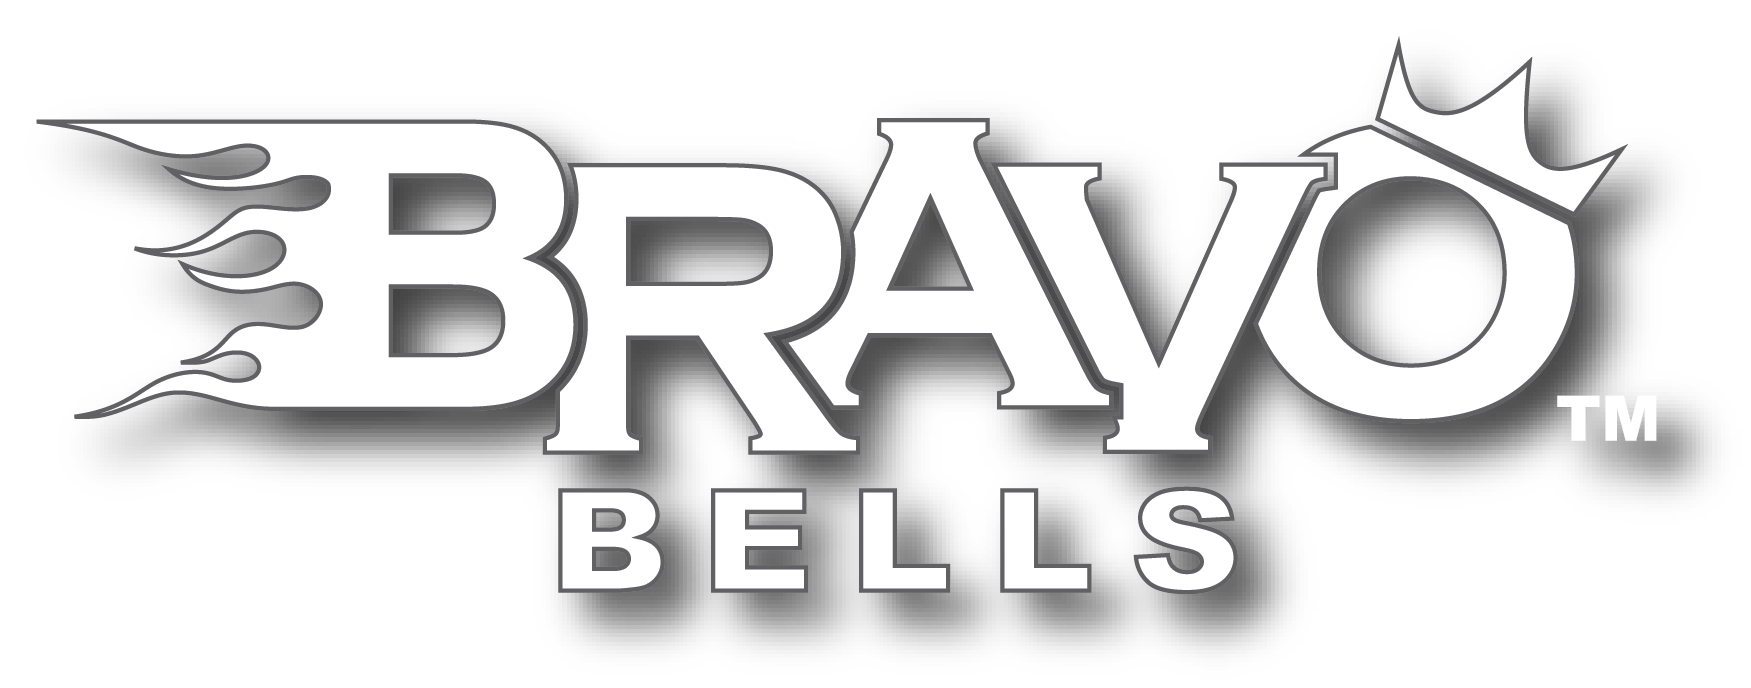 Bravo Bells